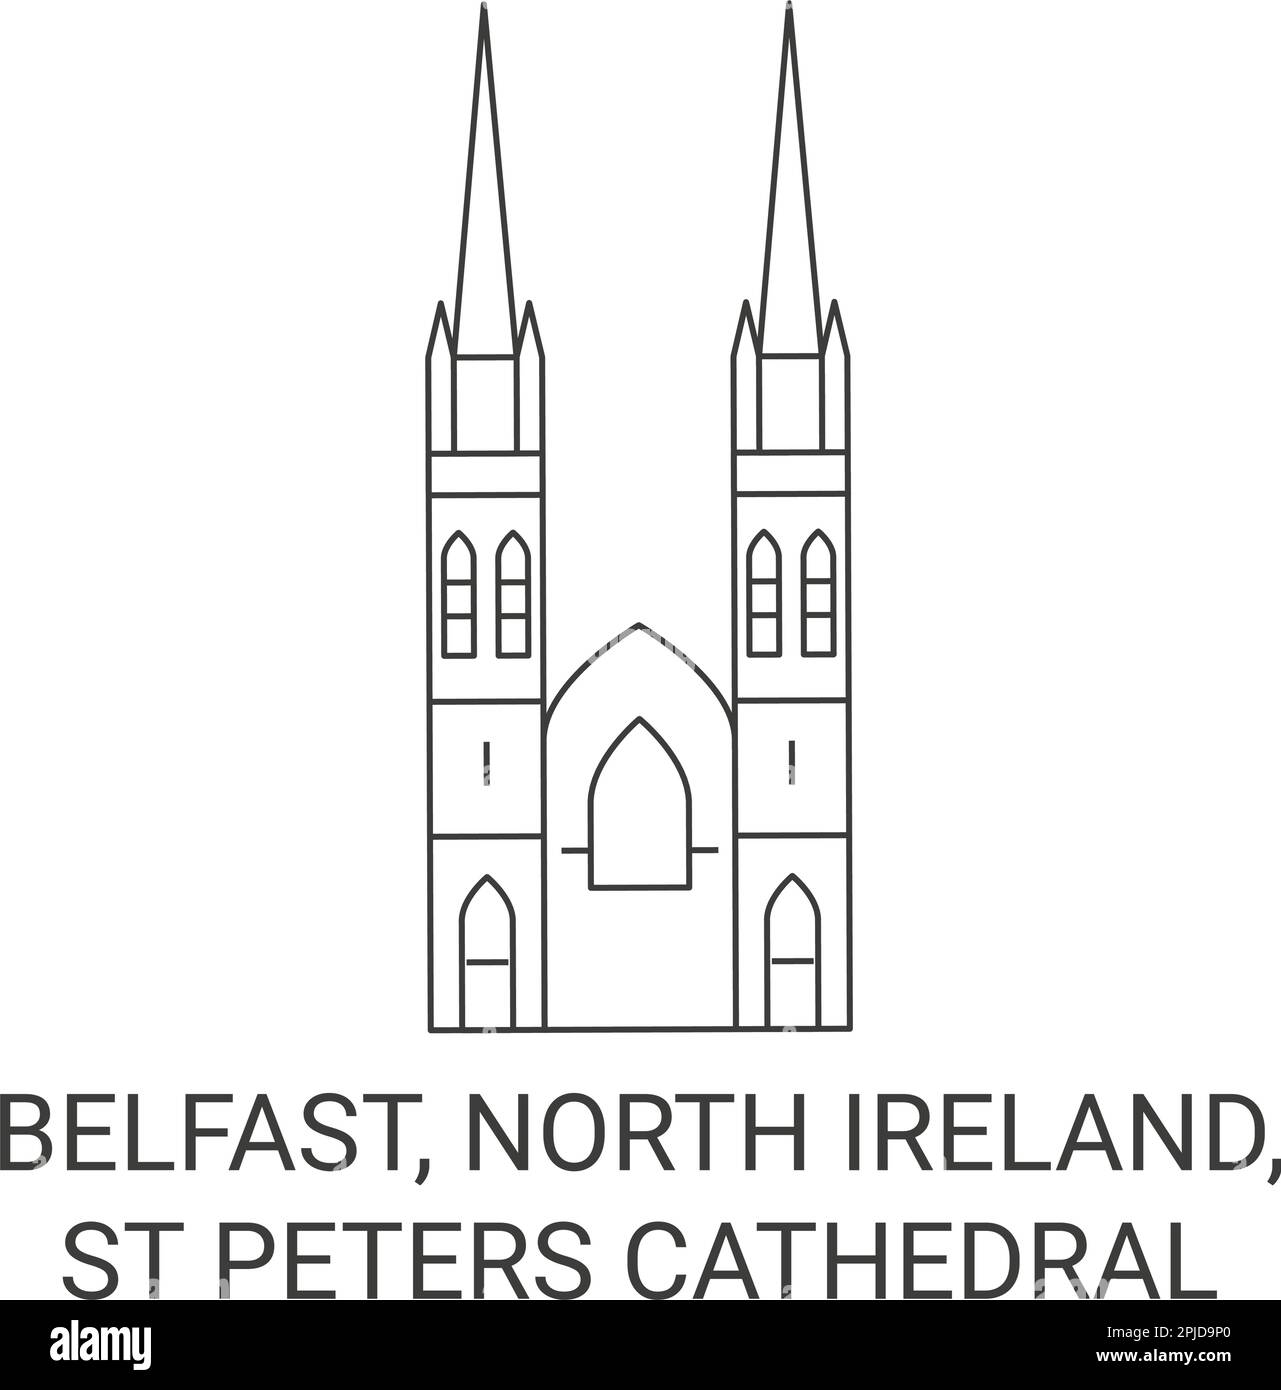 Ireland, Belfast, St Peters Cathedral travel landmark vector illustration Stock Vector